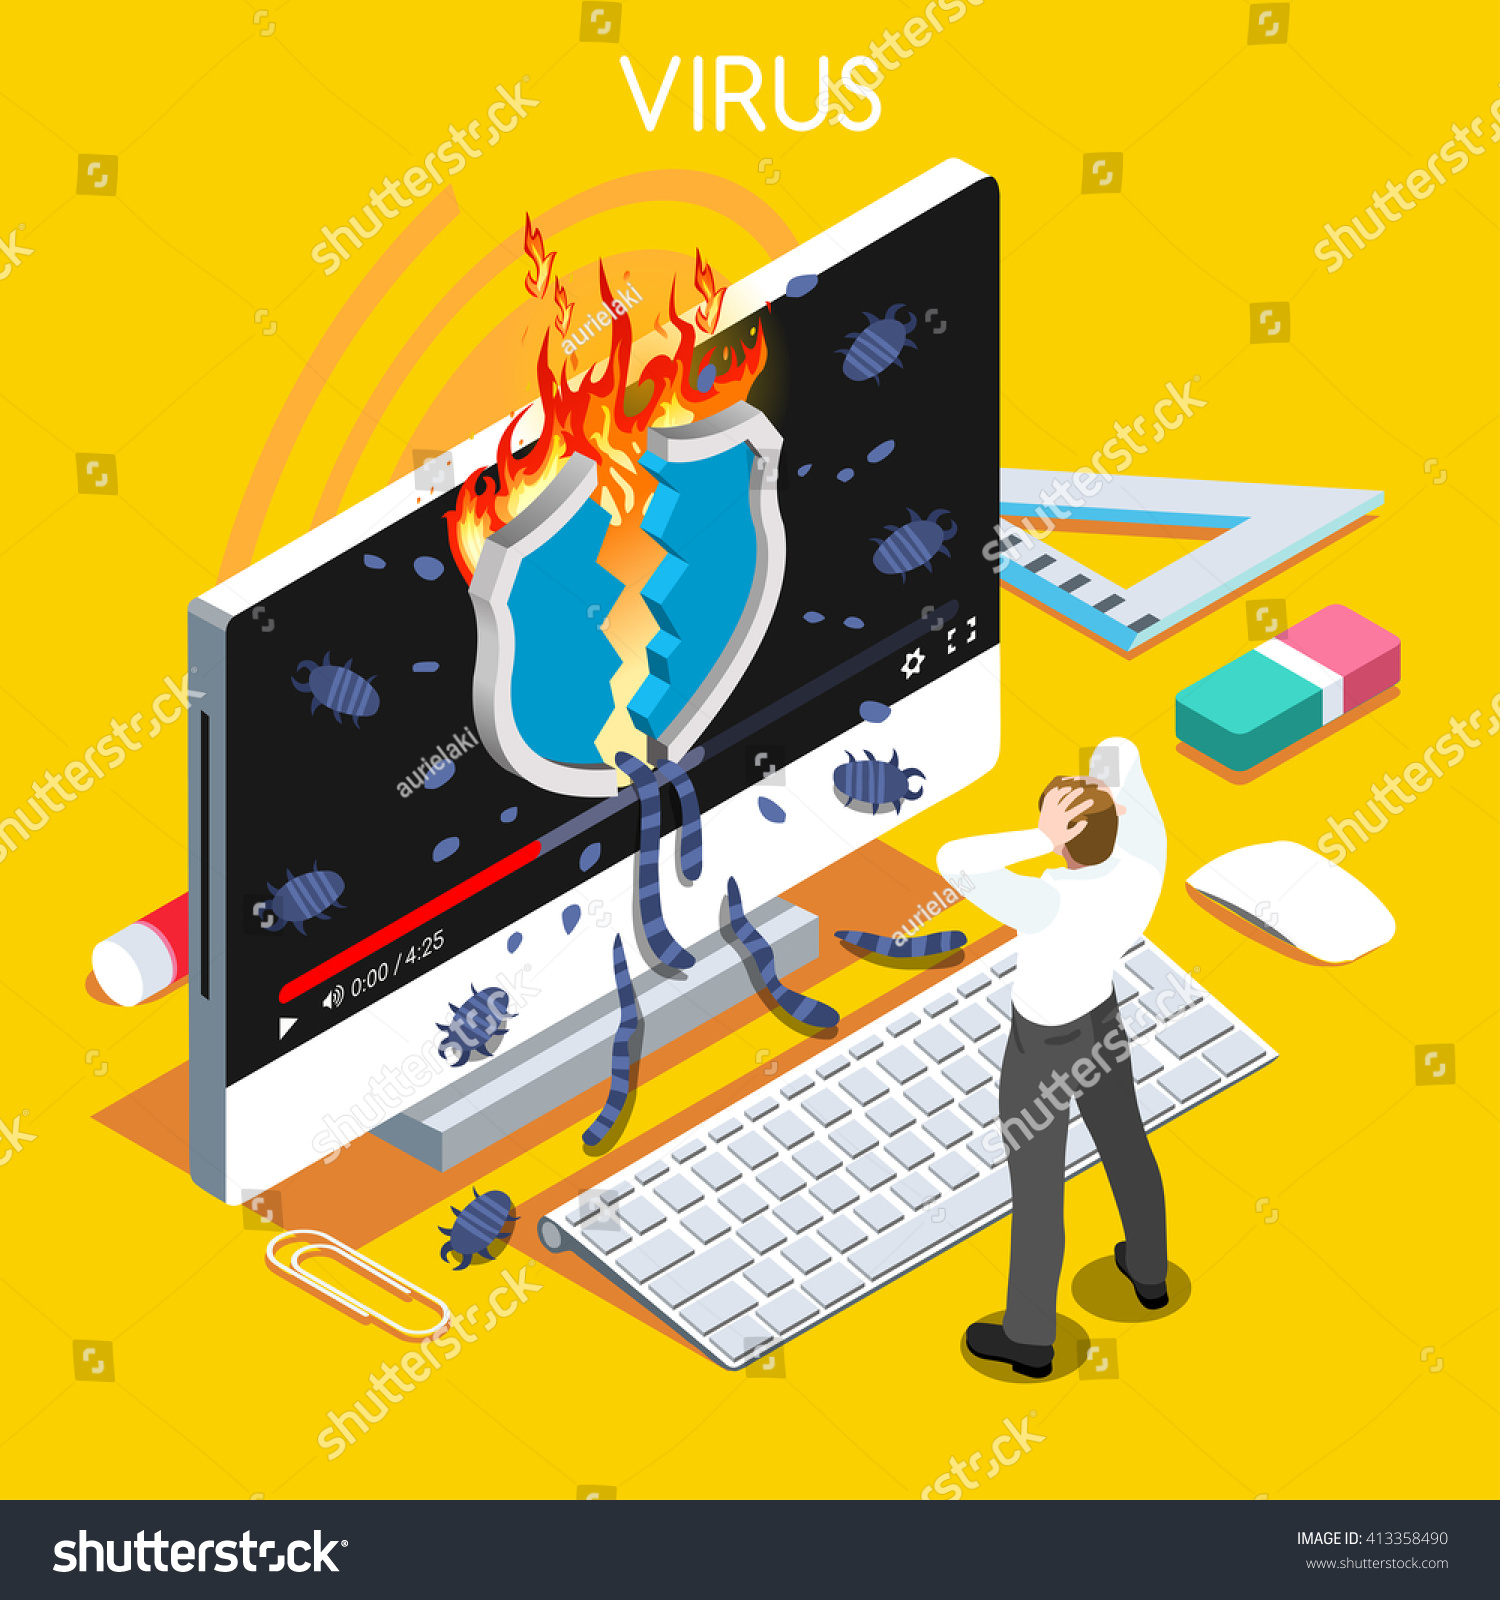 trojan pc virus